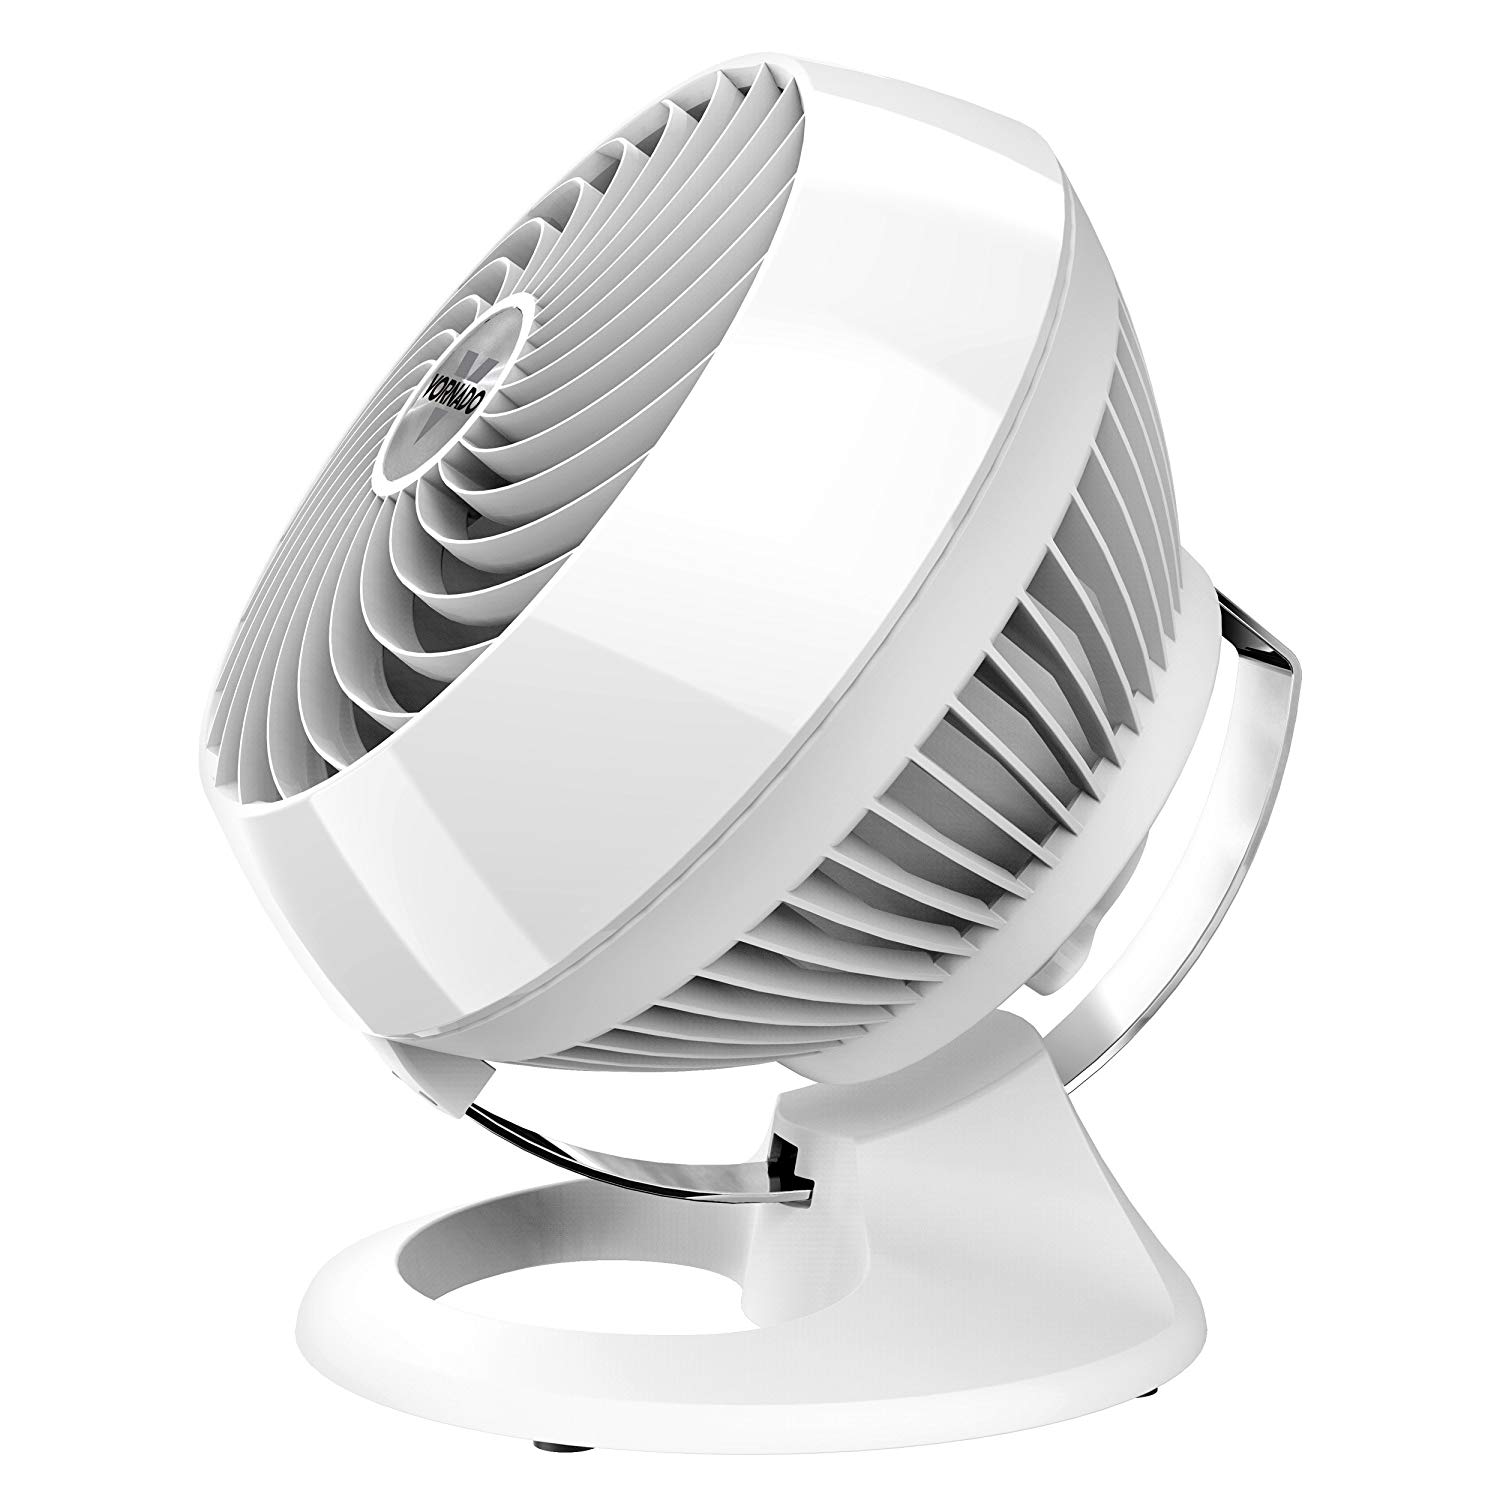 Vornado Vortex Multi-Directional Table Fan